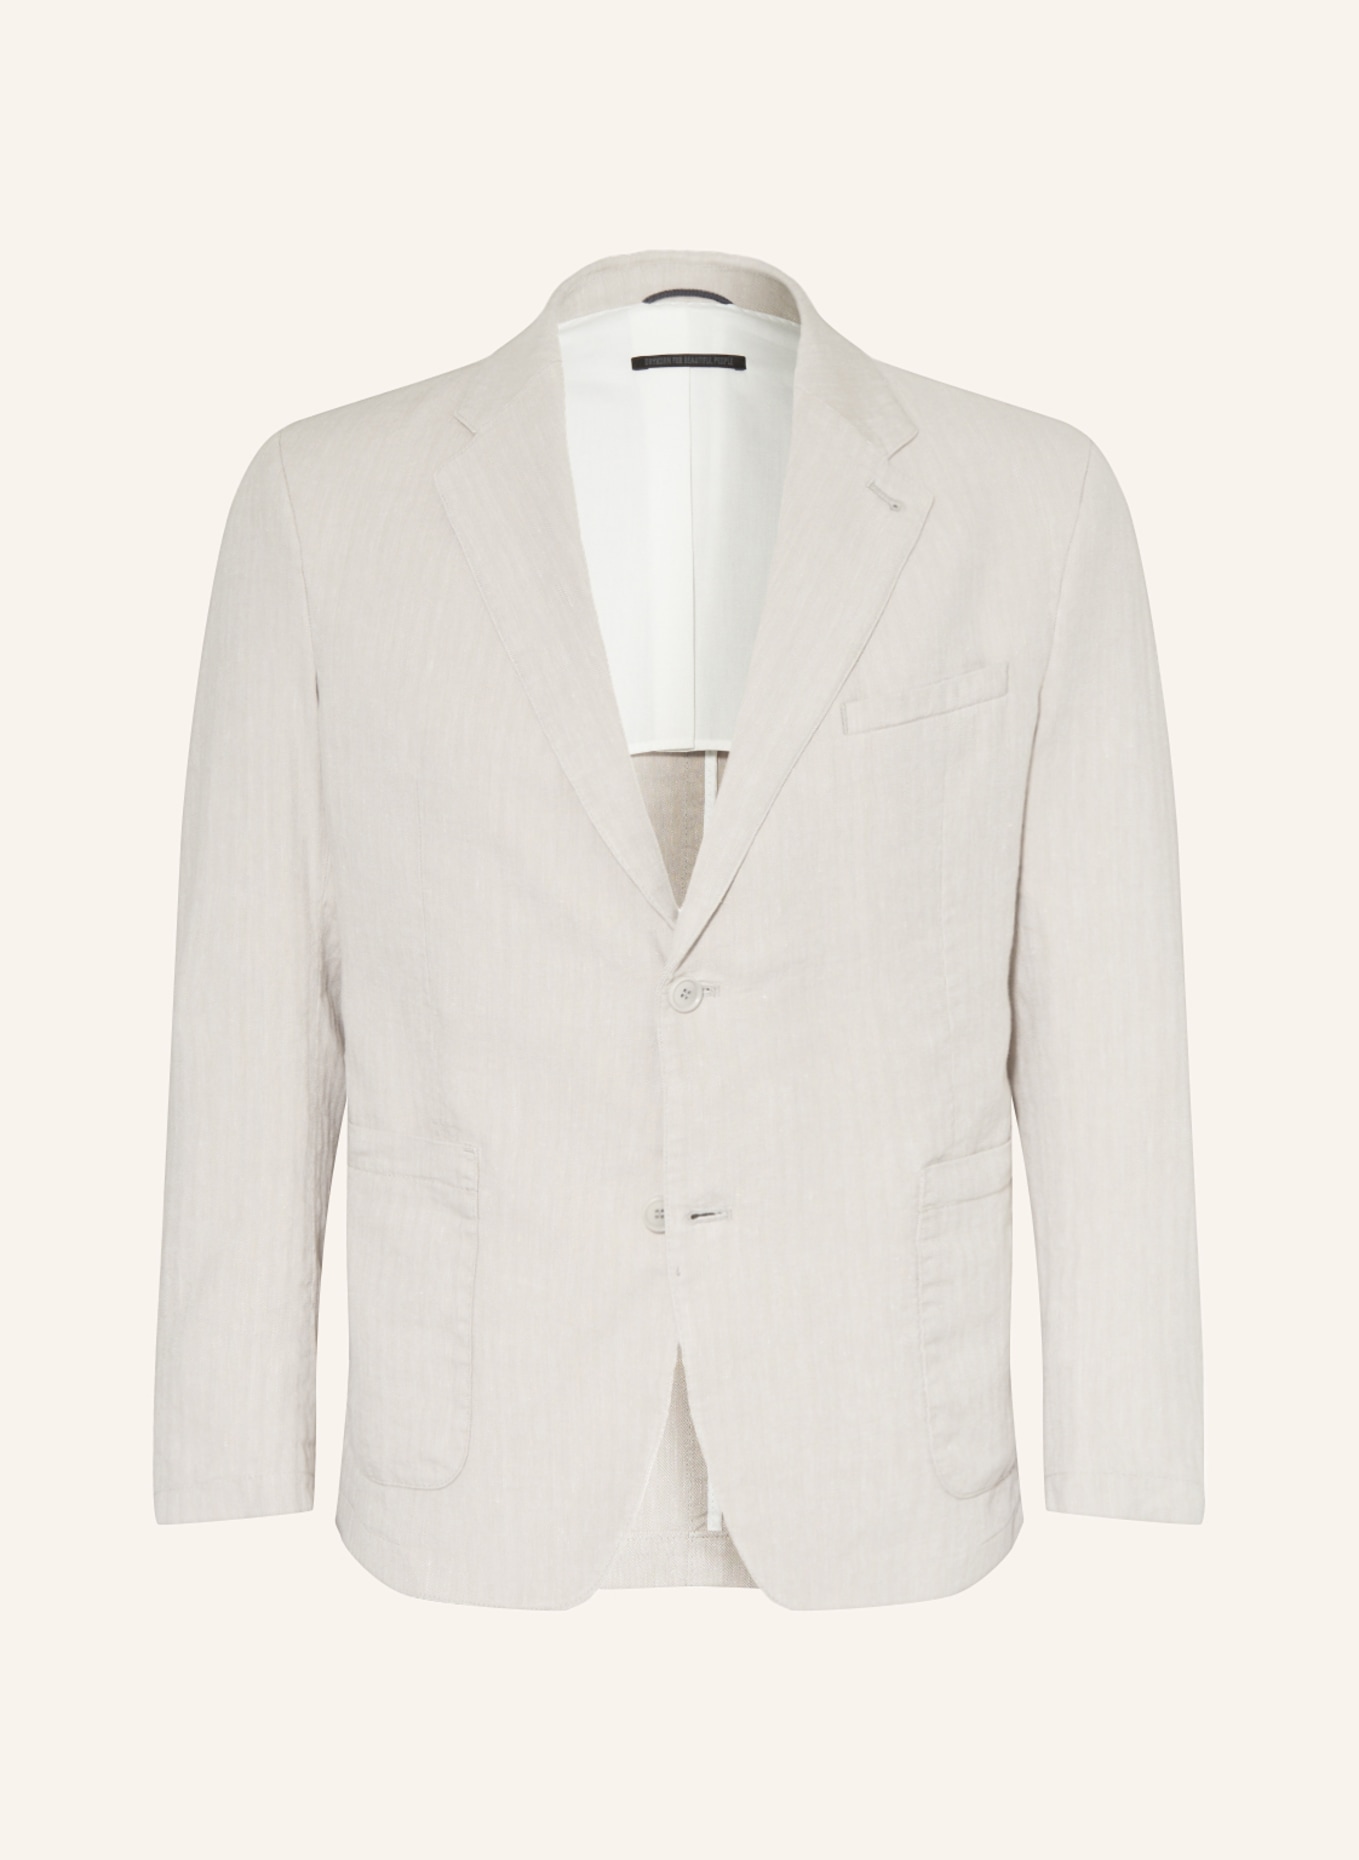 DRYKORN Suit CARLES regular fit with linen in light gray | Breuninger